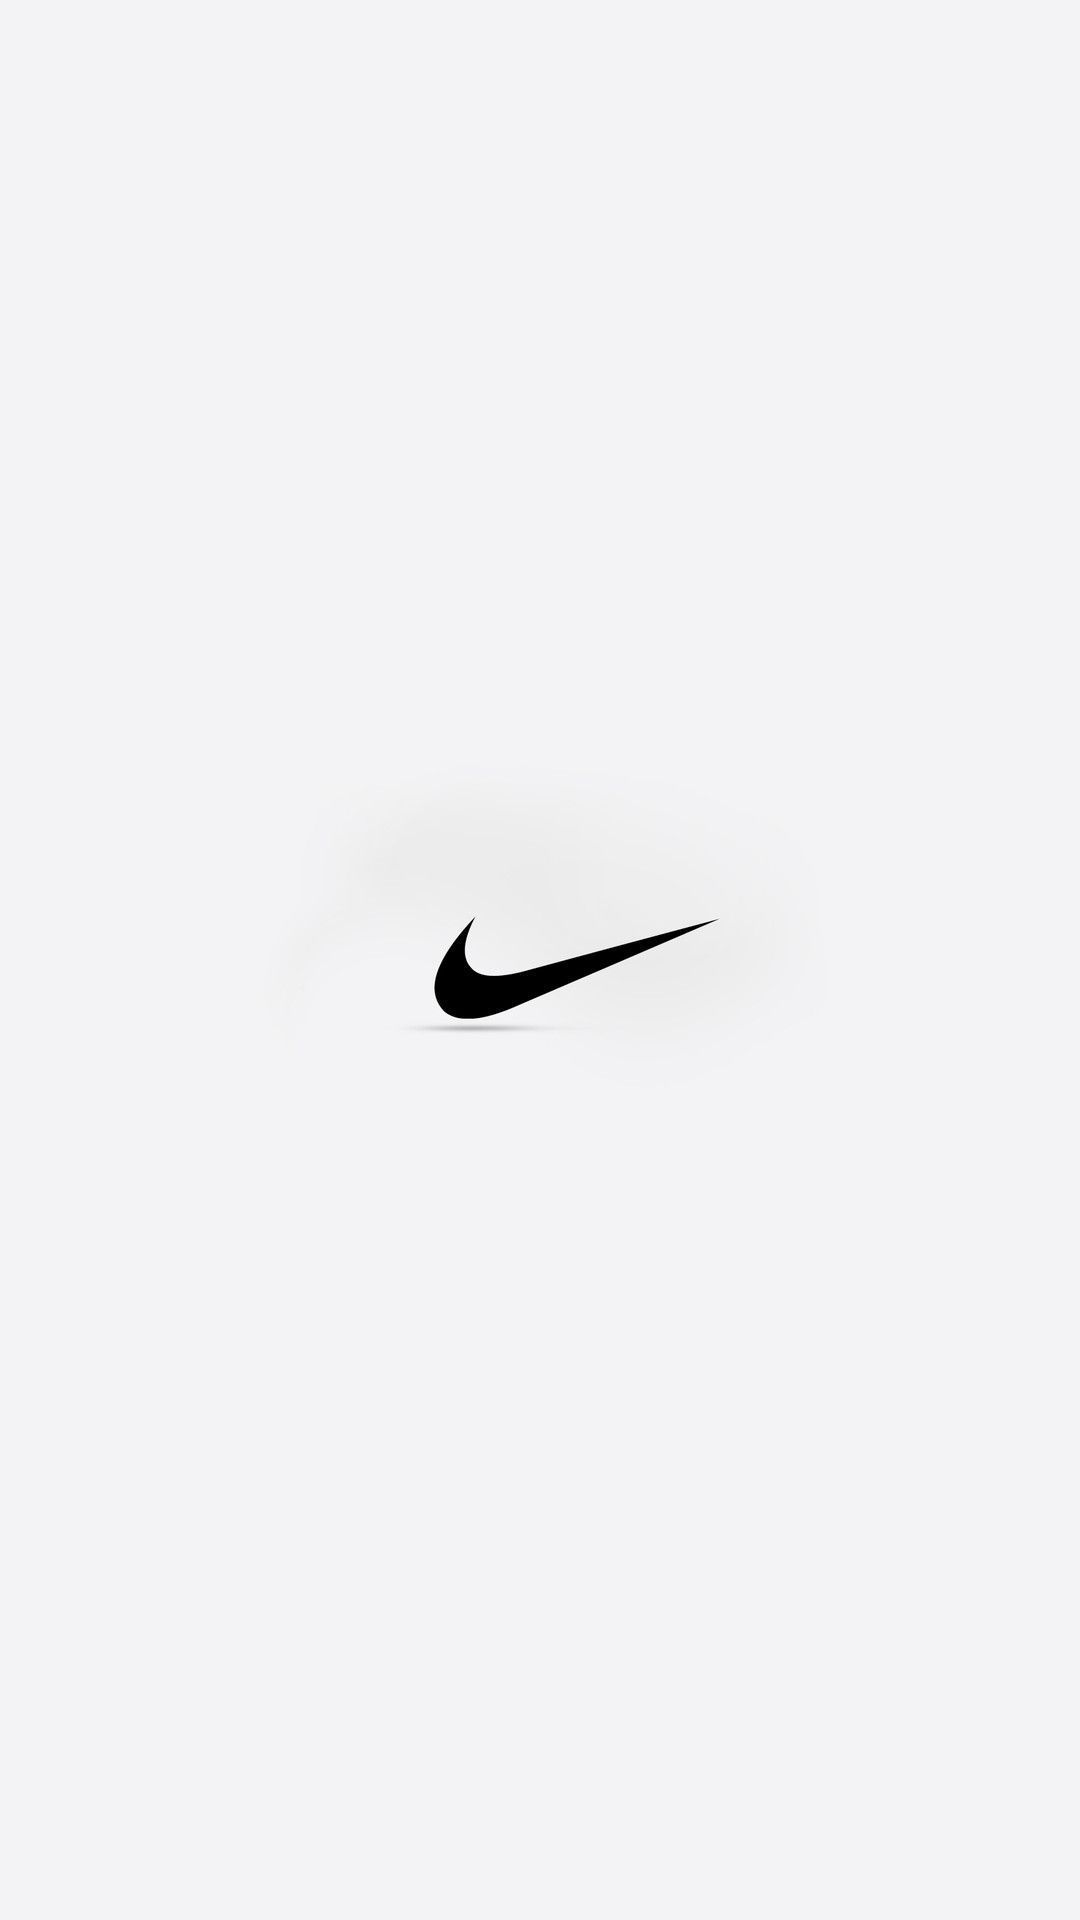 4K Nike Wallpaper Free 4K Nike Background 2021. Nike wallpaper, Nike logo wallpaper, Nike wallpaper iphone